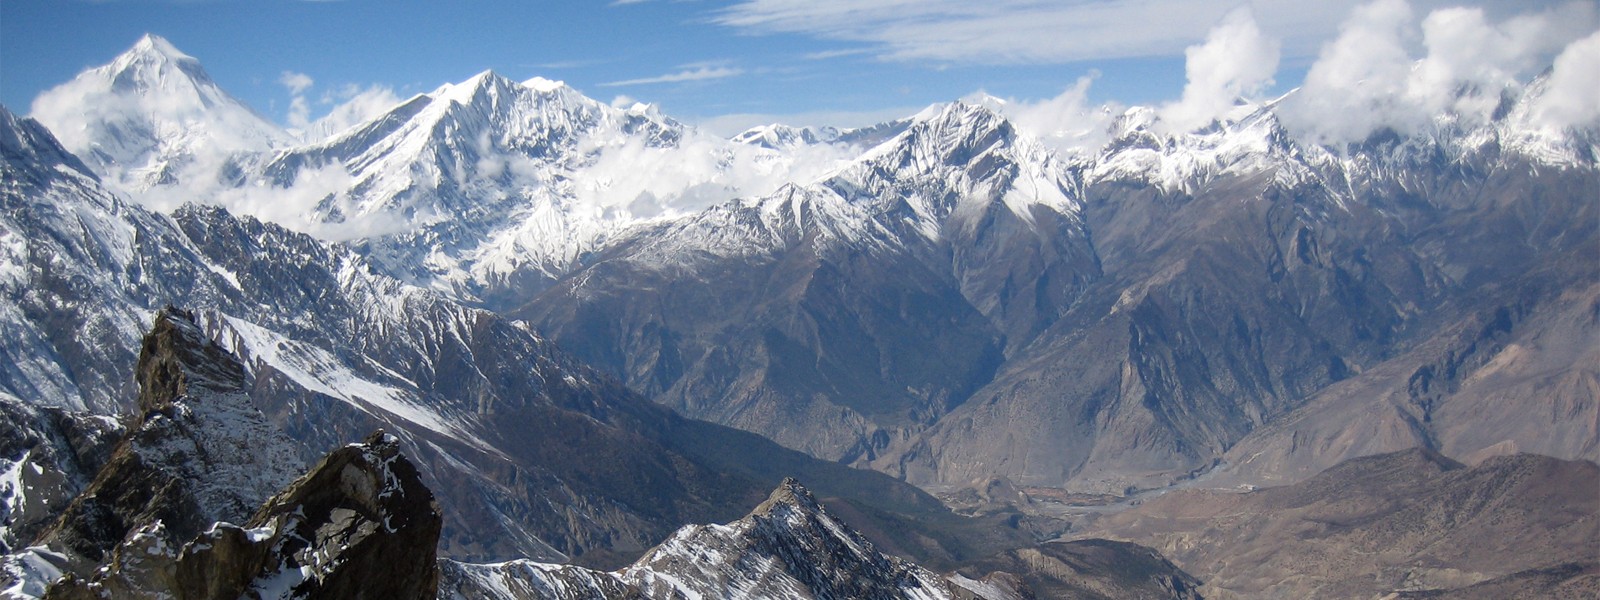 Mount Tilicho Peak Expedition Information